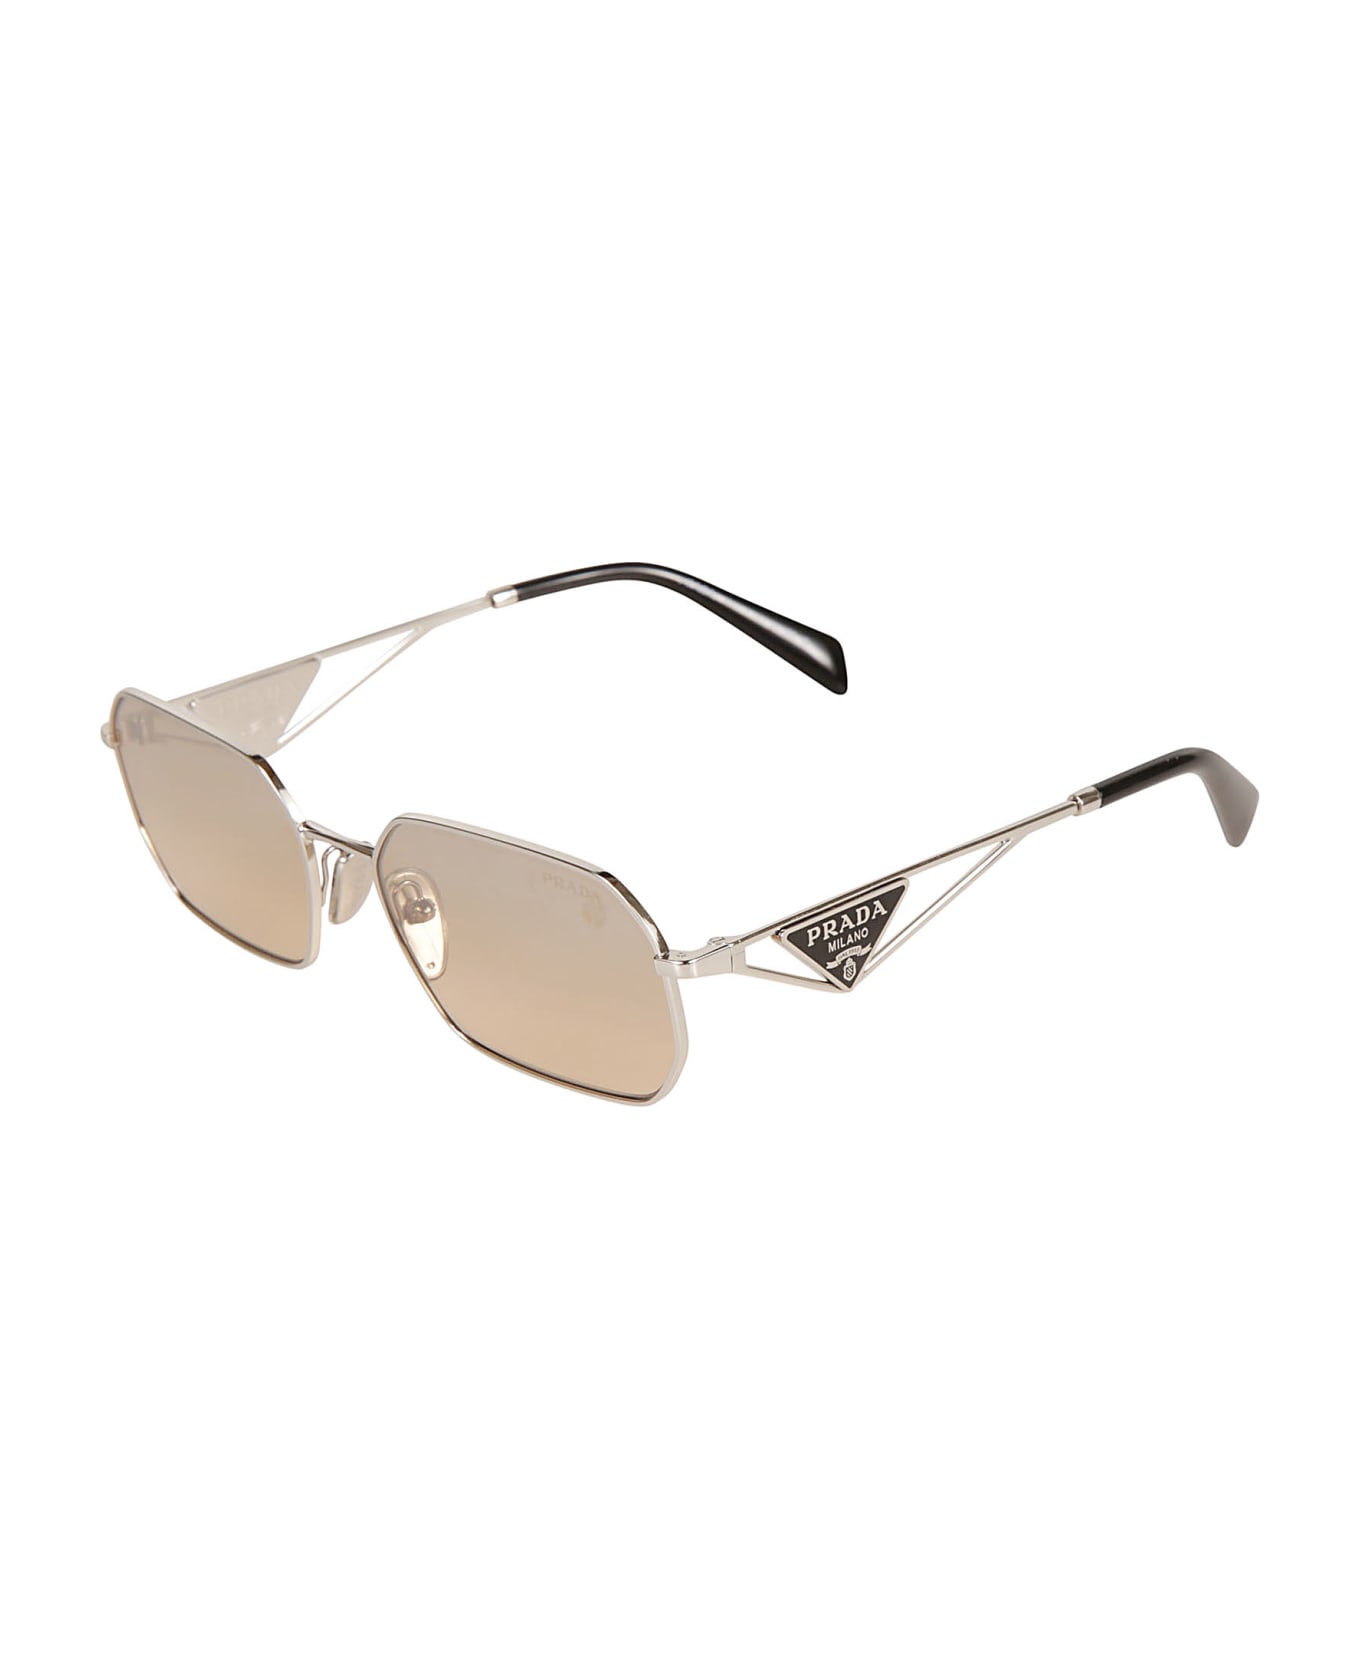 Prada Eyewear Sole Sunglasses - 1BC8J1